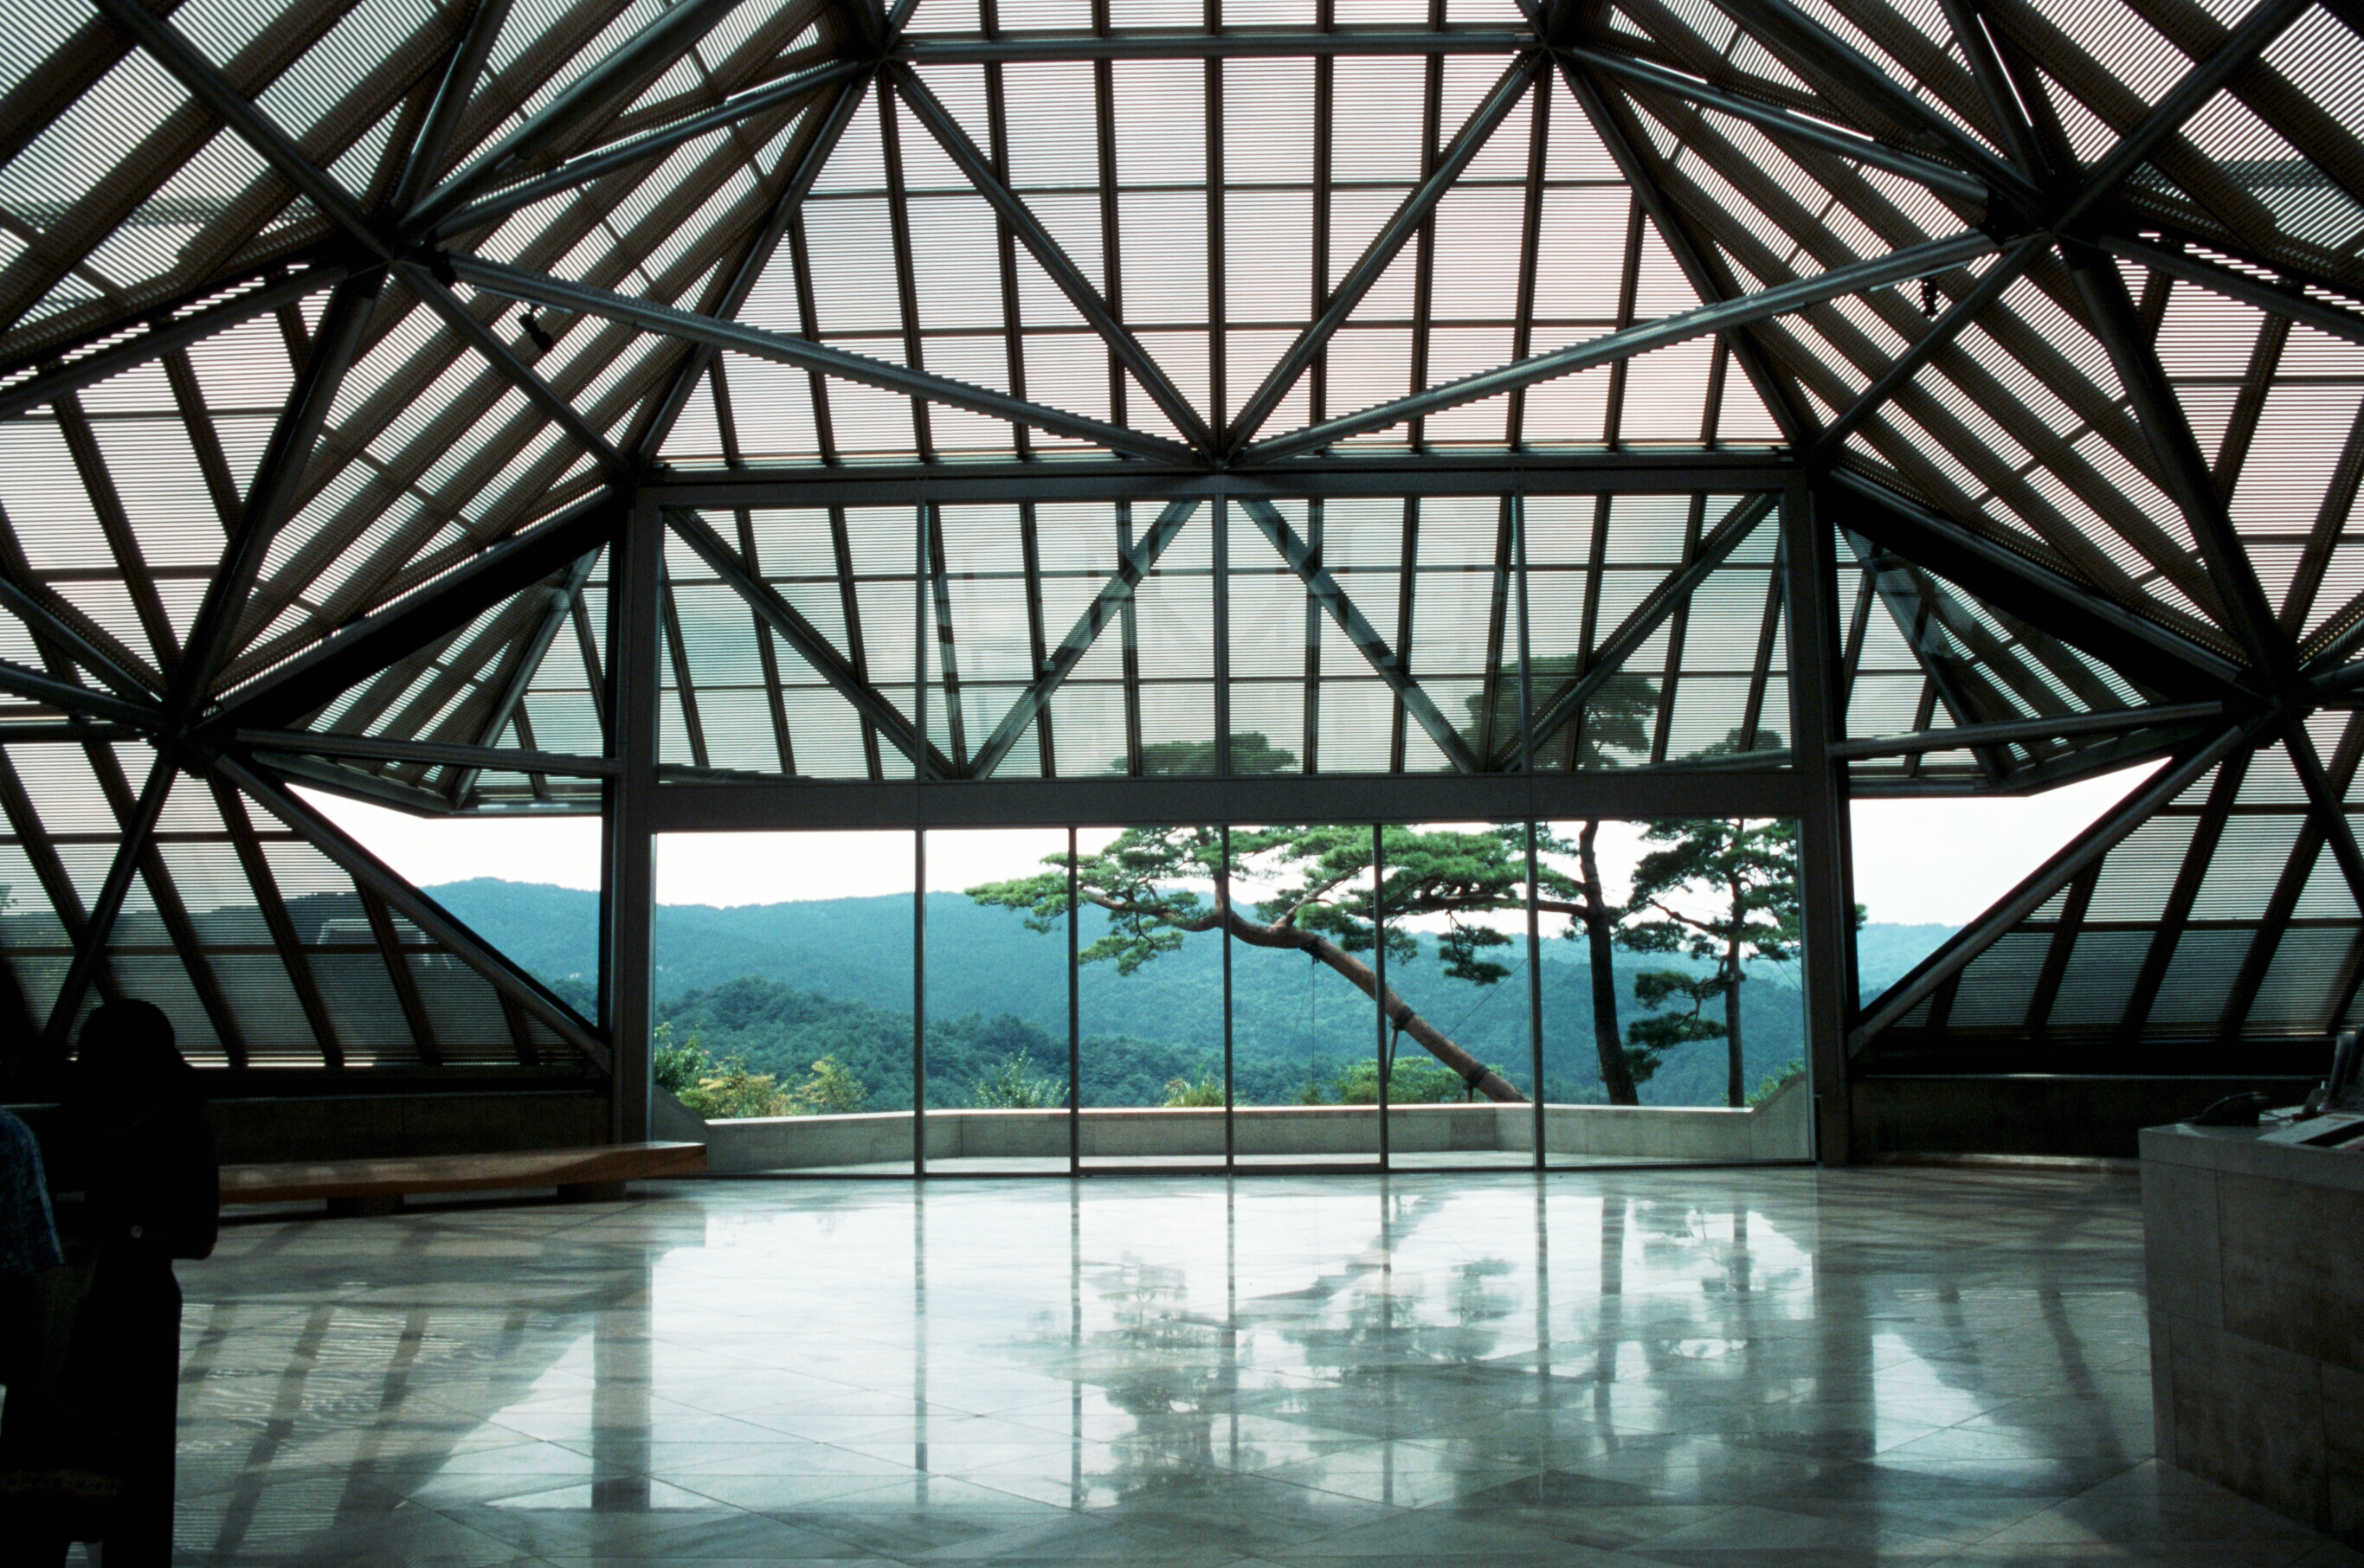 Interior of glass entrance atrium of Miho Museum designed by